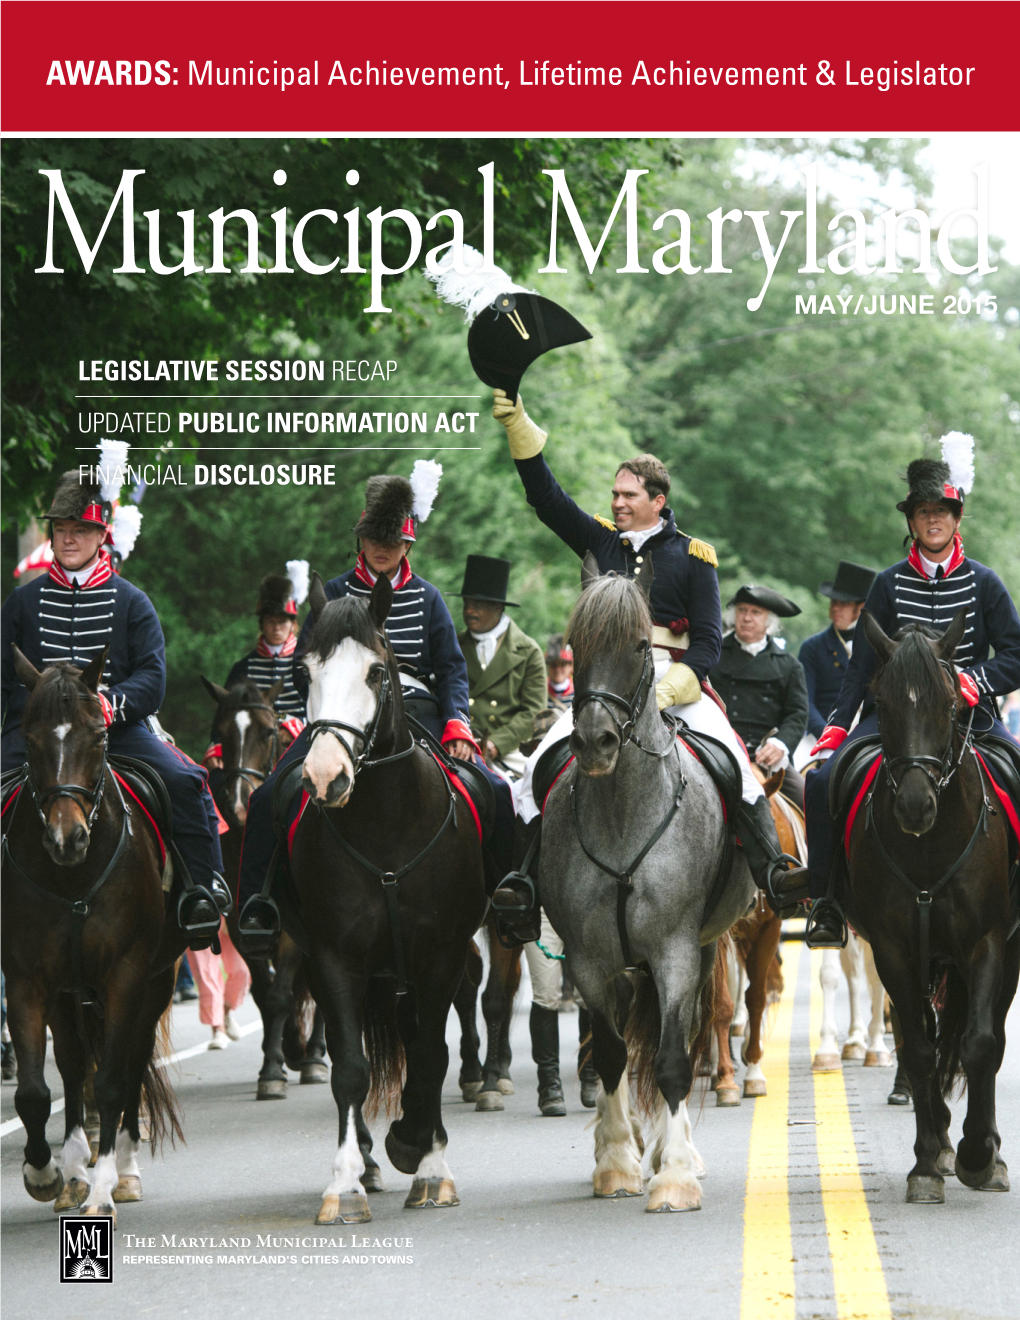 Municipal Maryland the OFFICIAL PUBLICATION of MARYLAND MUNICIPAL LEAGUE